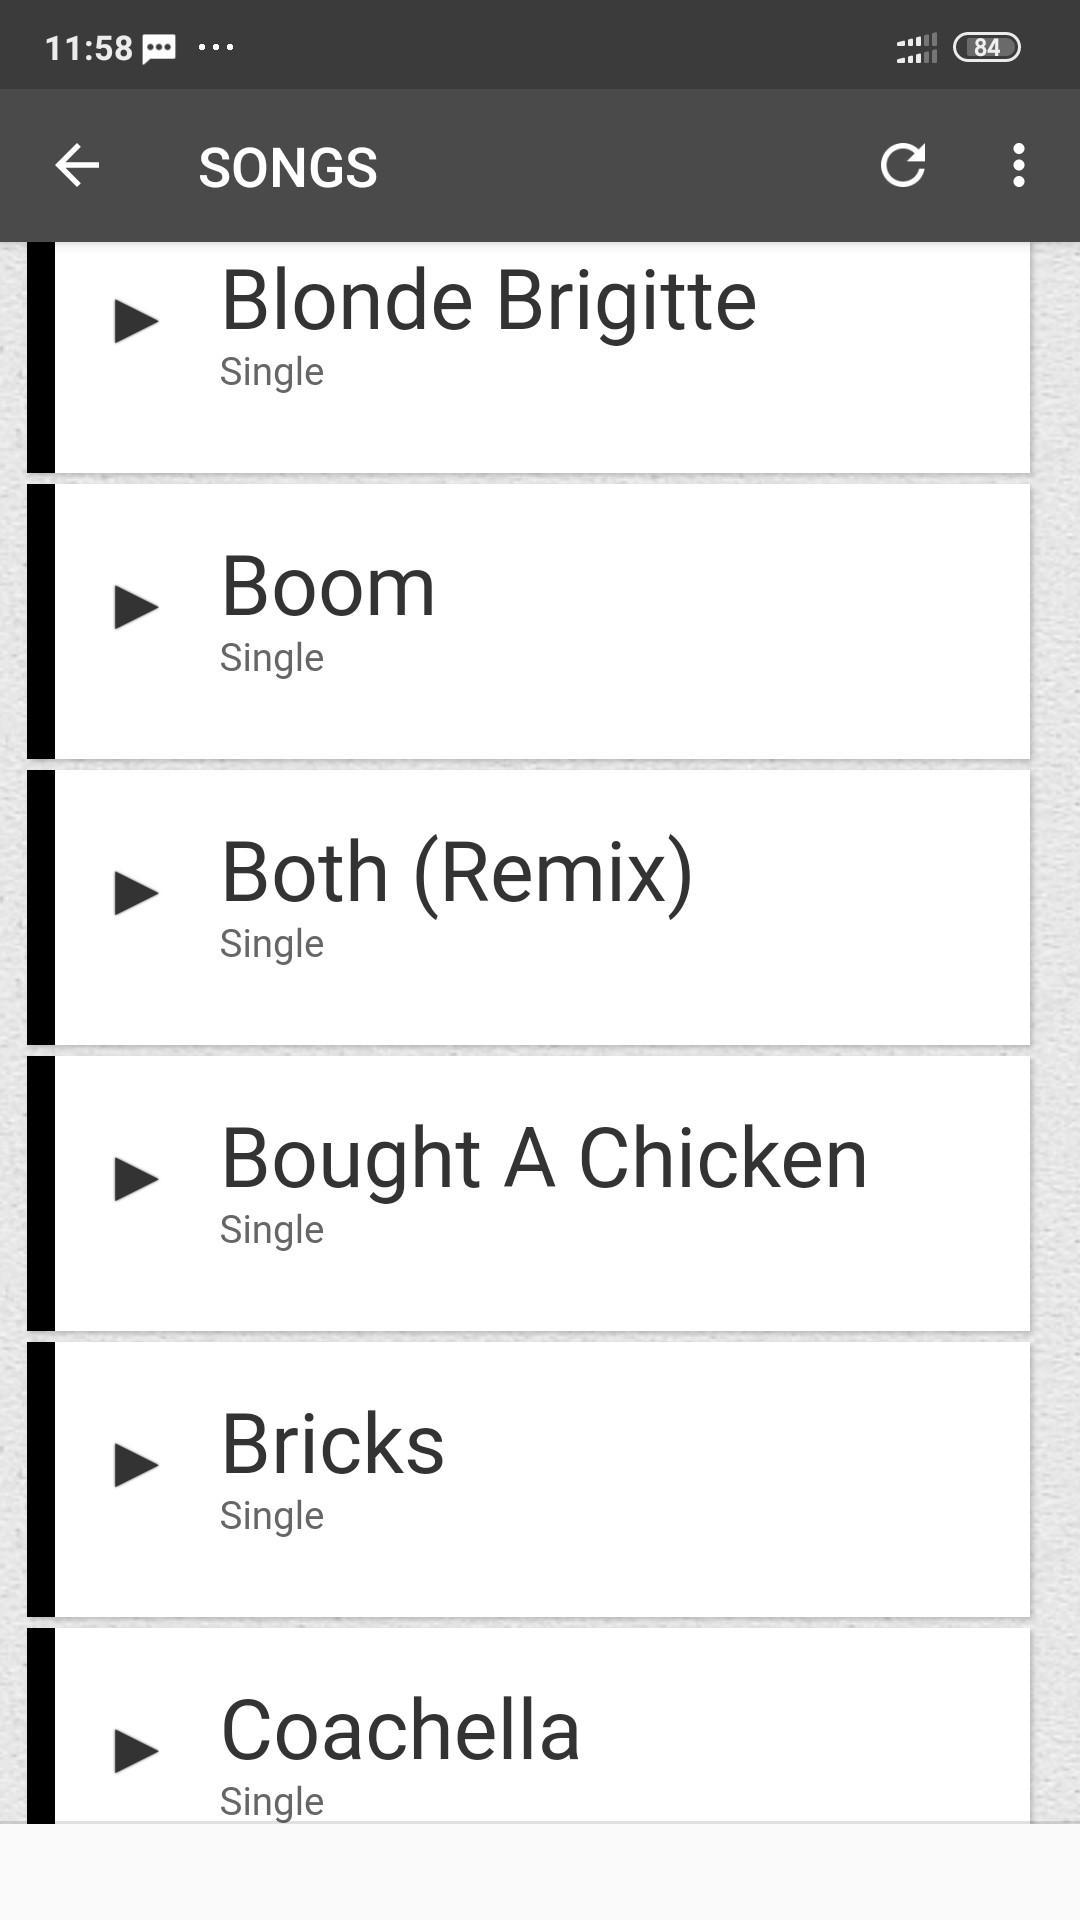 Gucci Mane Lyrics for Android - APK Download